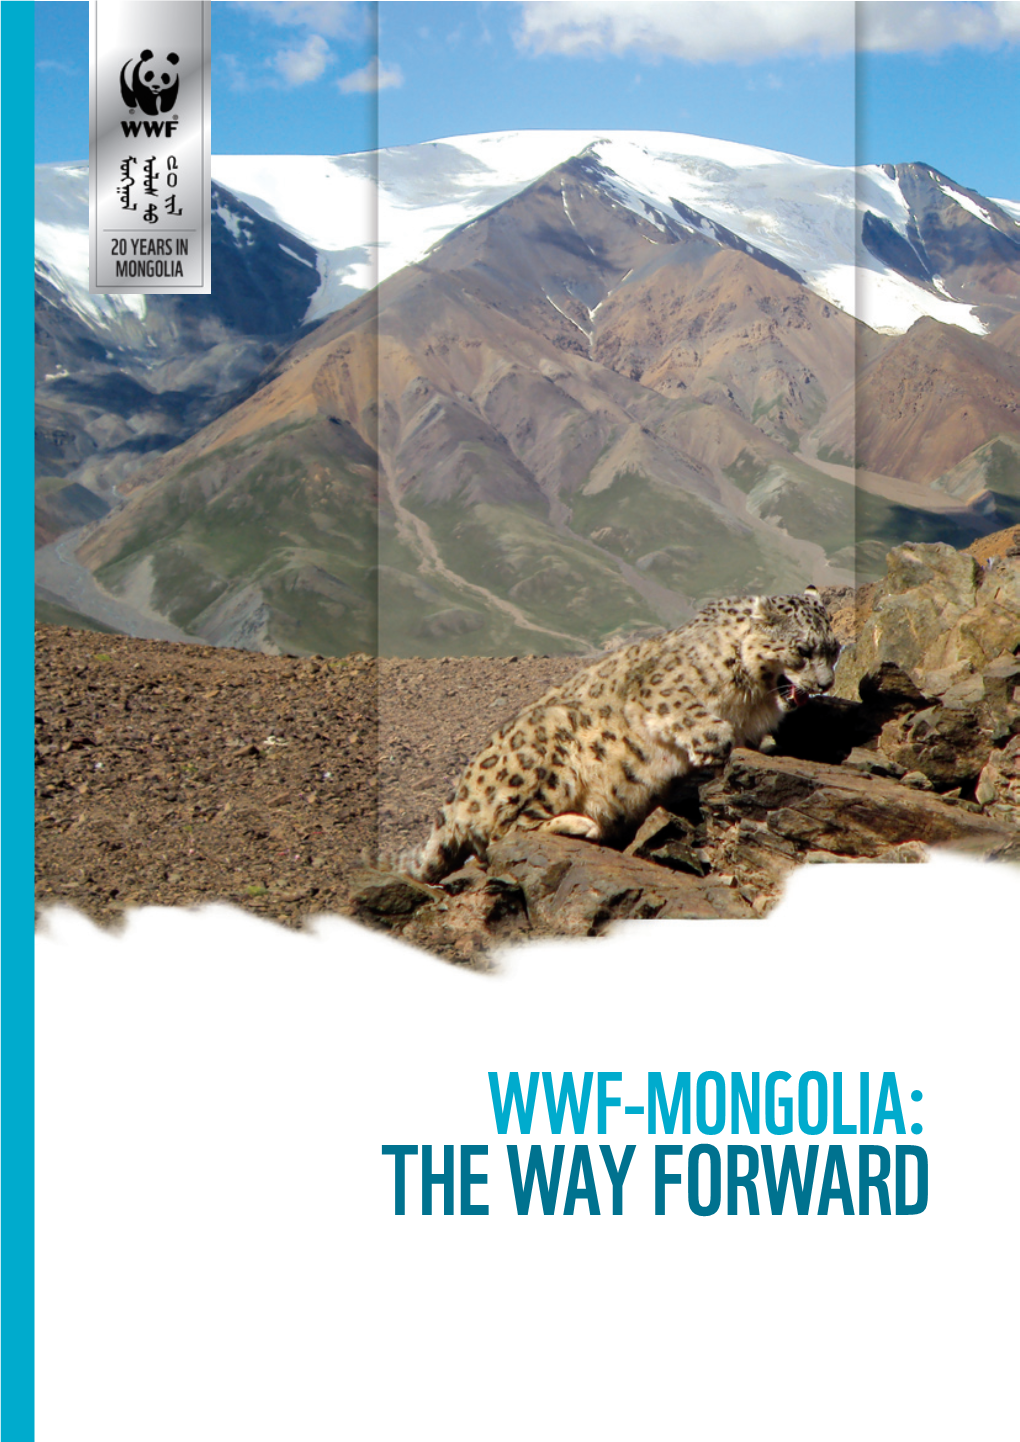 WWF-Mongolia: WWF-Mongolia: the Way Forward • 1 WWF-Mongolia Achievement Summary and Landmark Dates